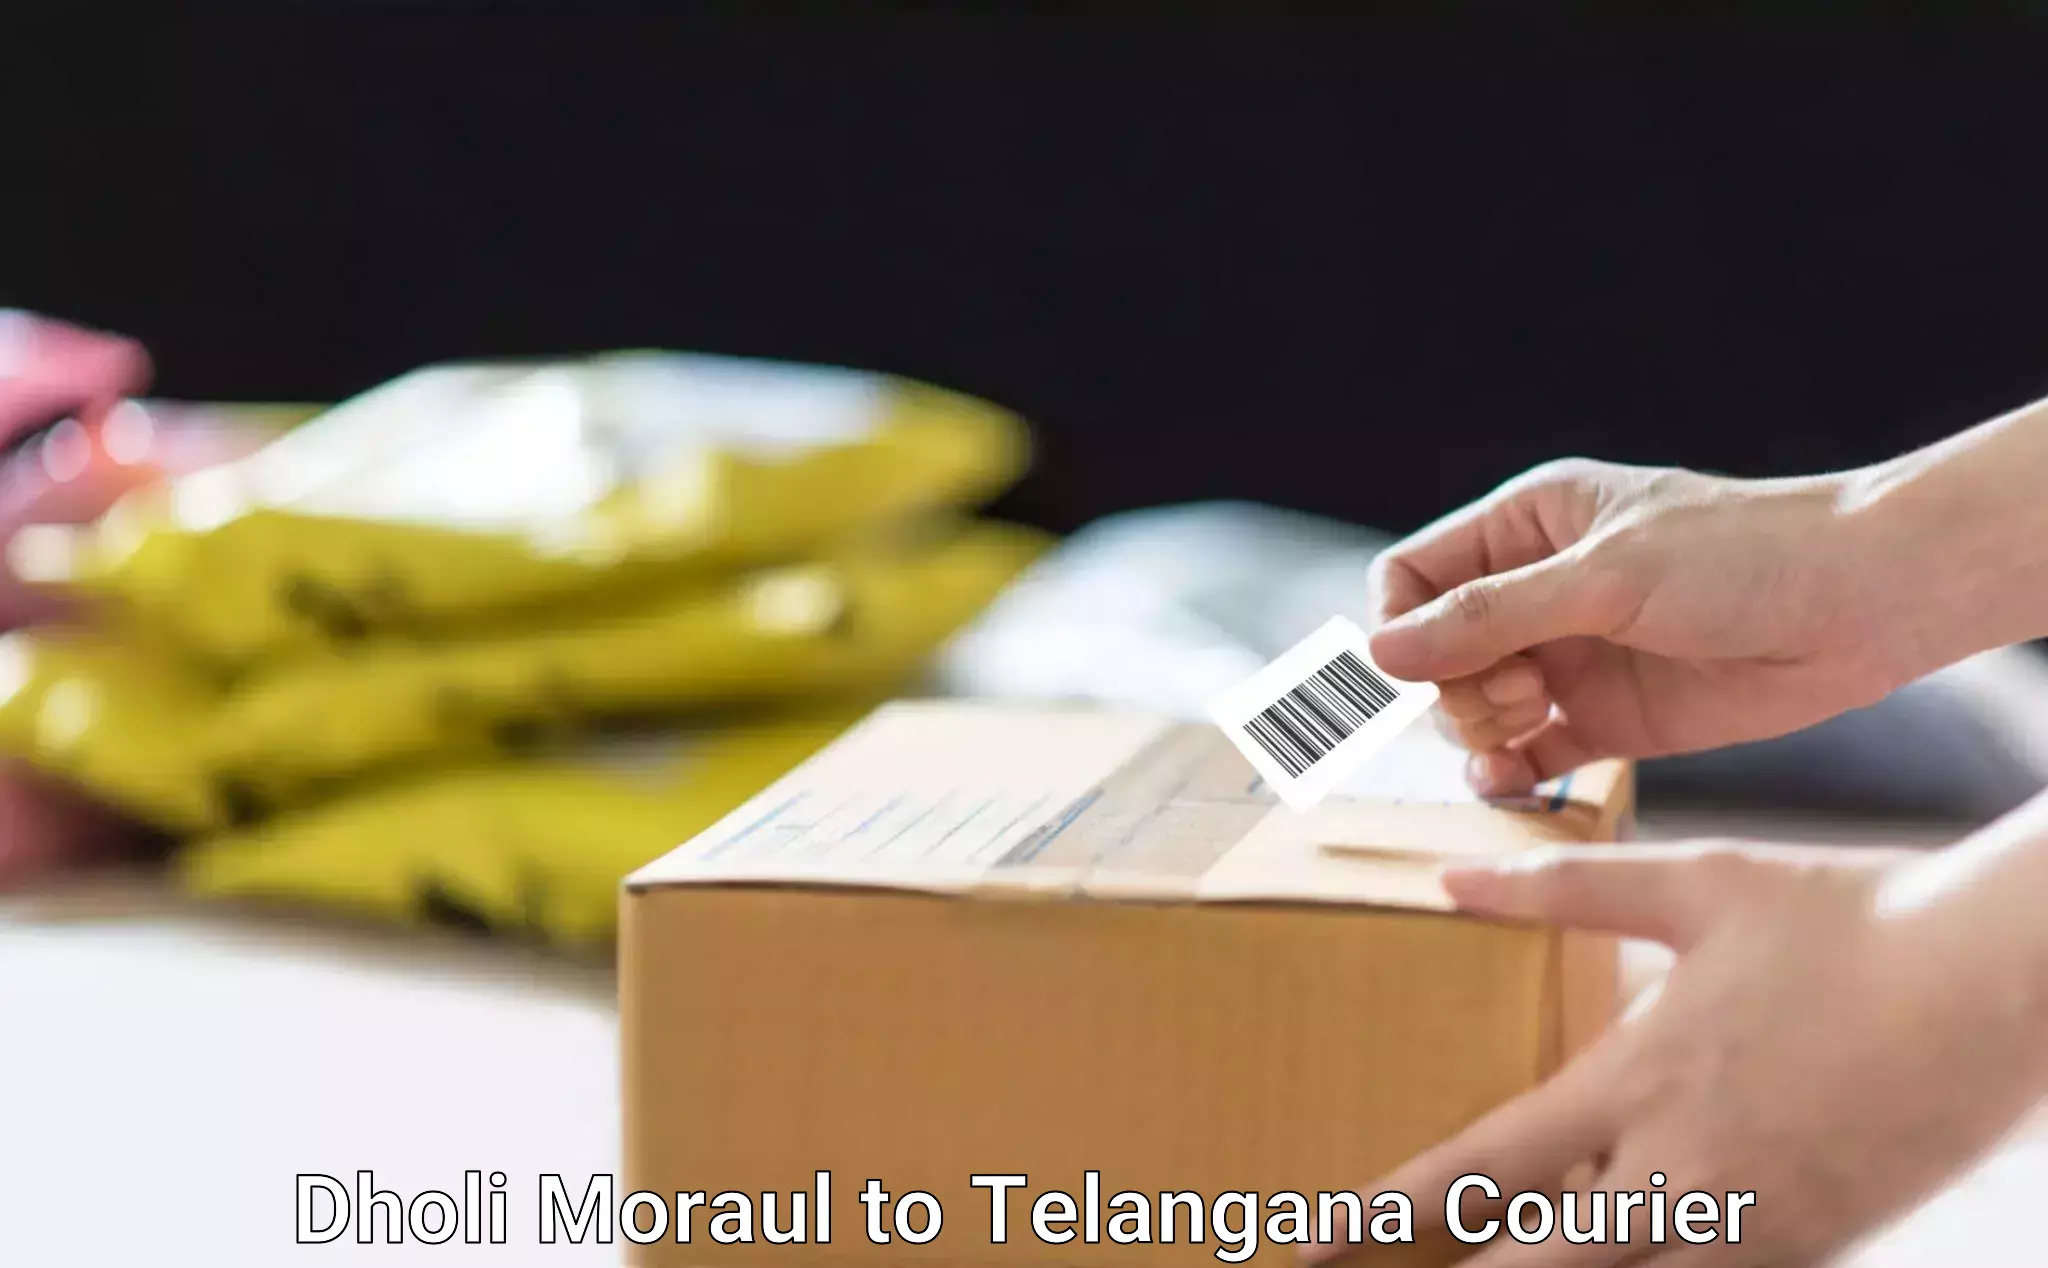 Professional furniture movers Dholi Moraul to Telangana